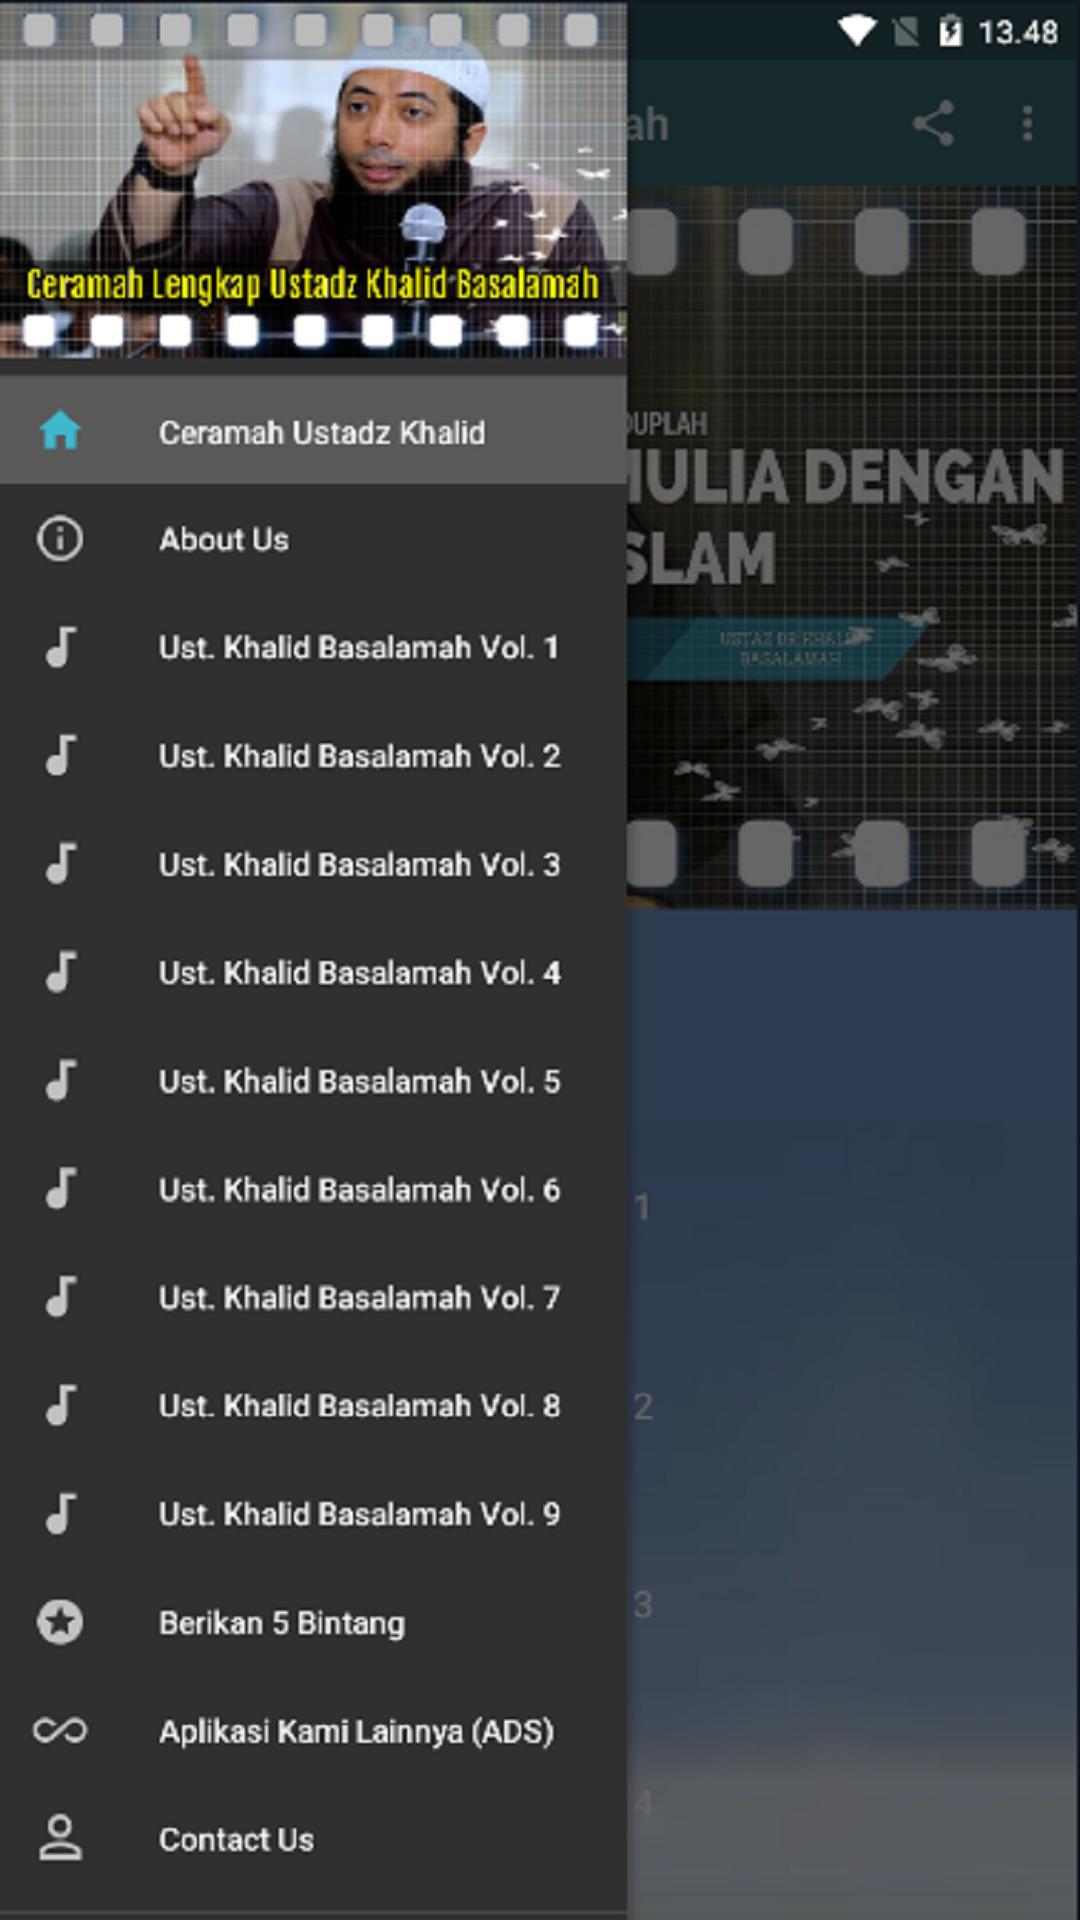 Ceramah Ustadz Khalid Basalamah Lengkap For Android Apk Download